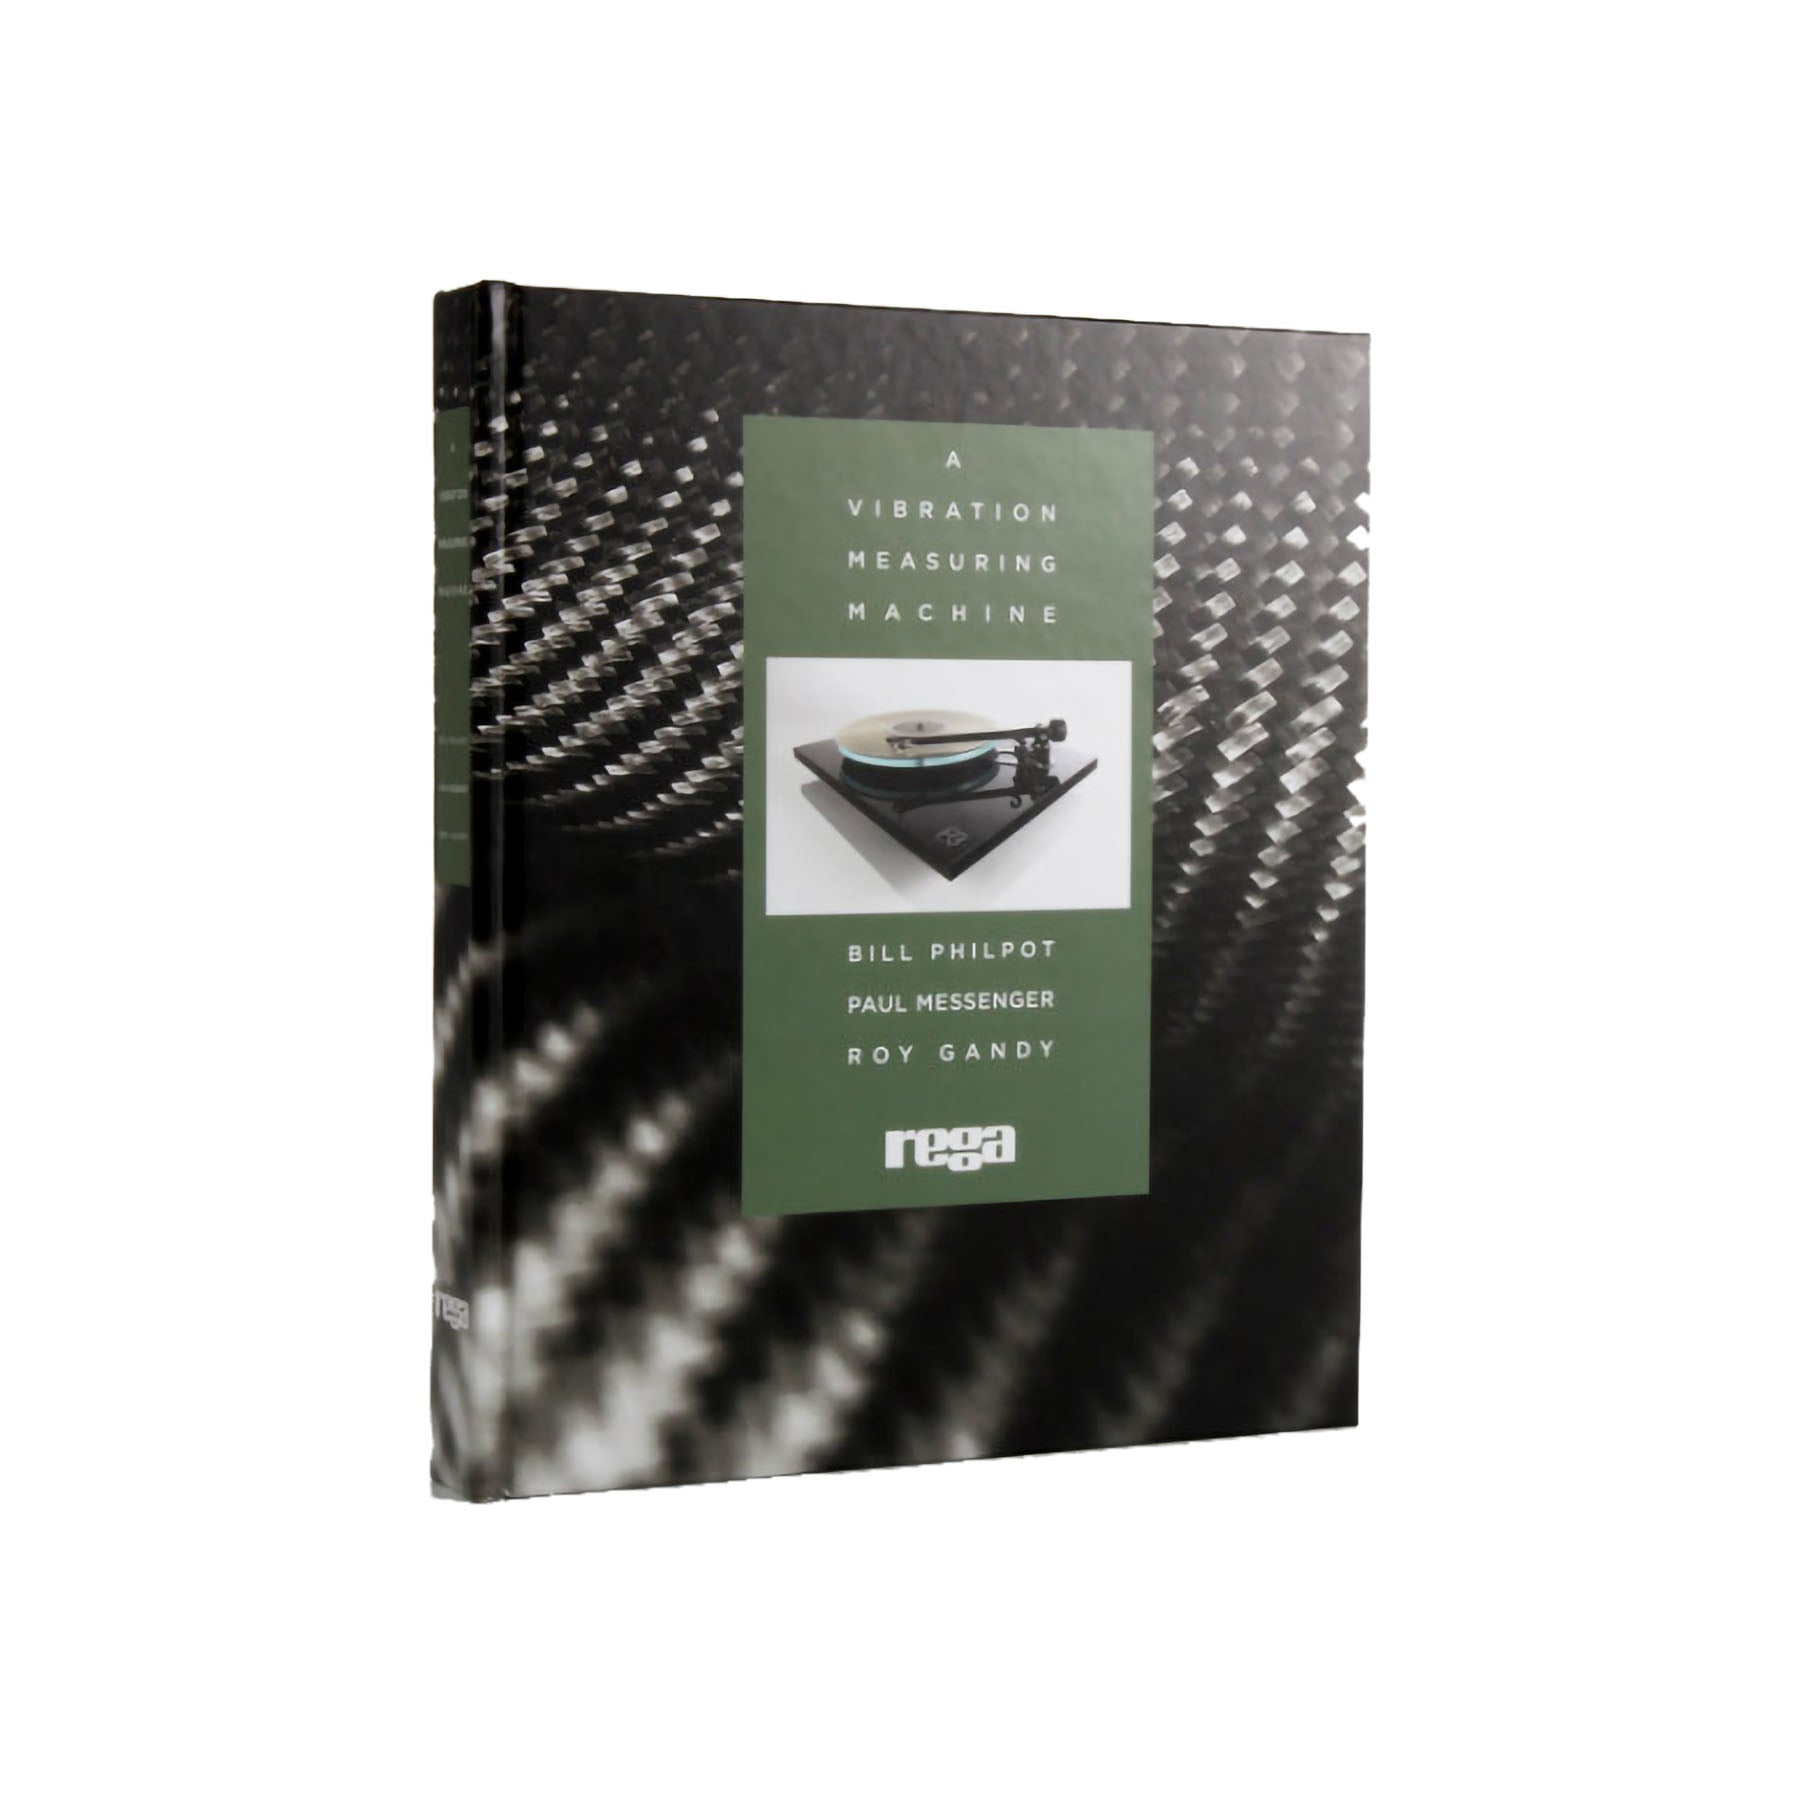 Rega Book A Vibration Measuring Machine - Bill Philpot, Paul Messenger & Roy Gandy